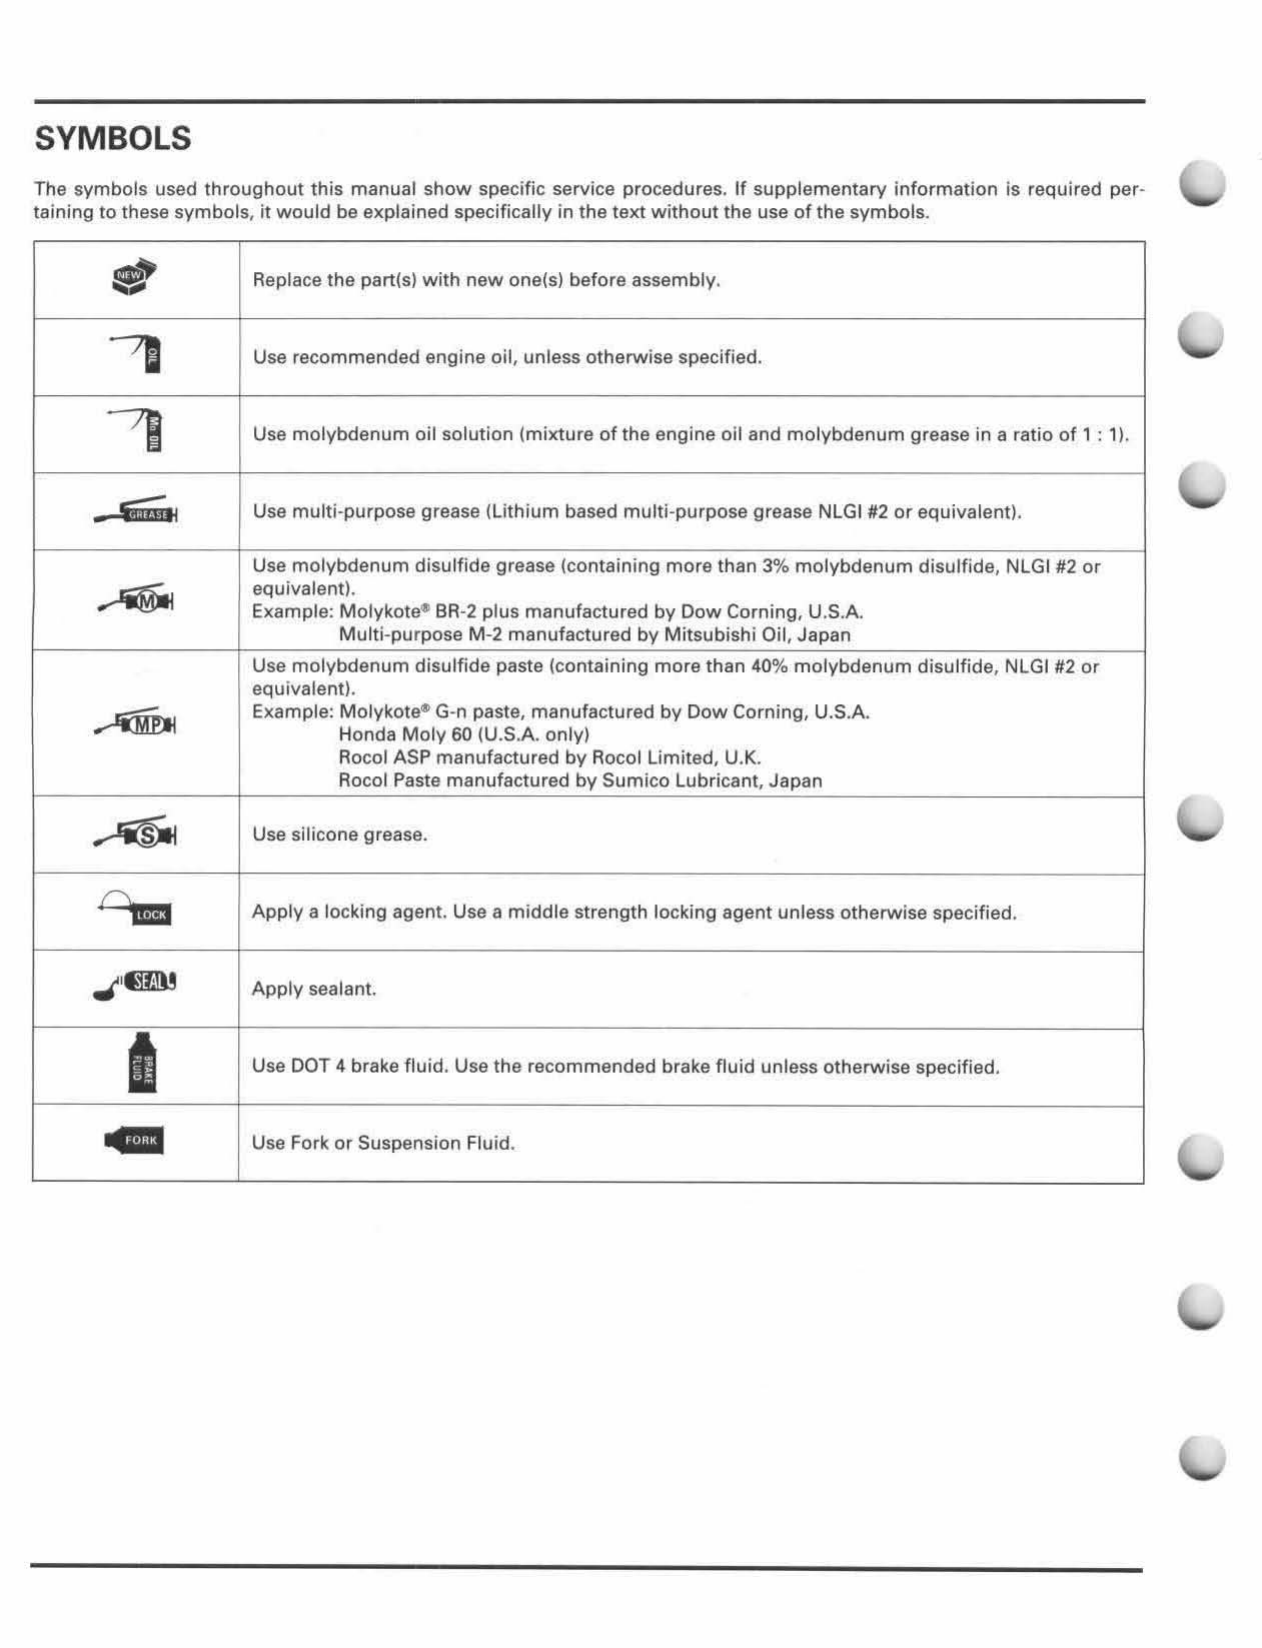 1999-2004 Honda TRX400ex service manual Preview image 4